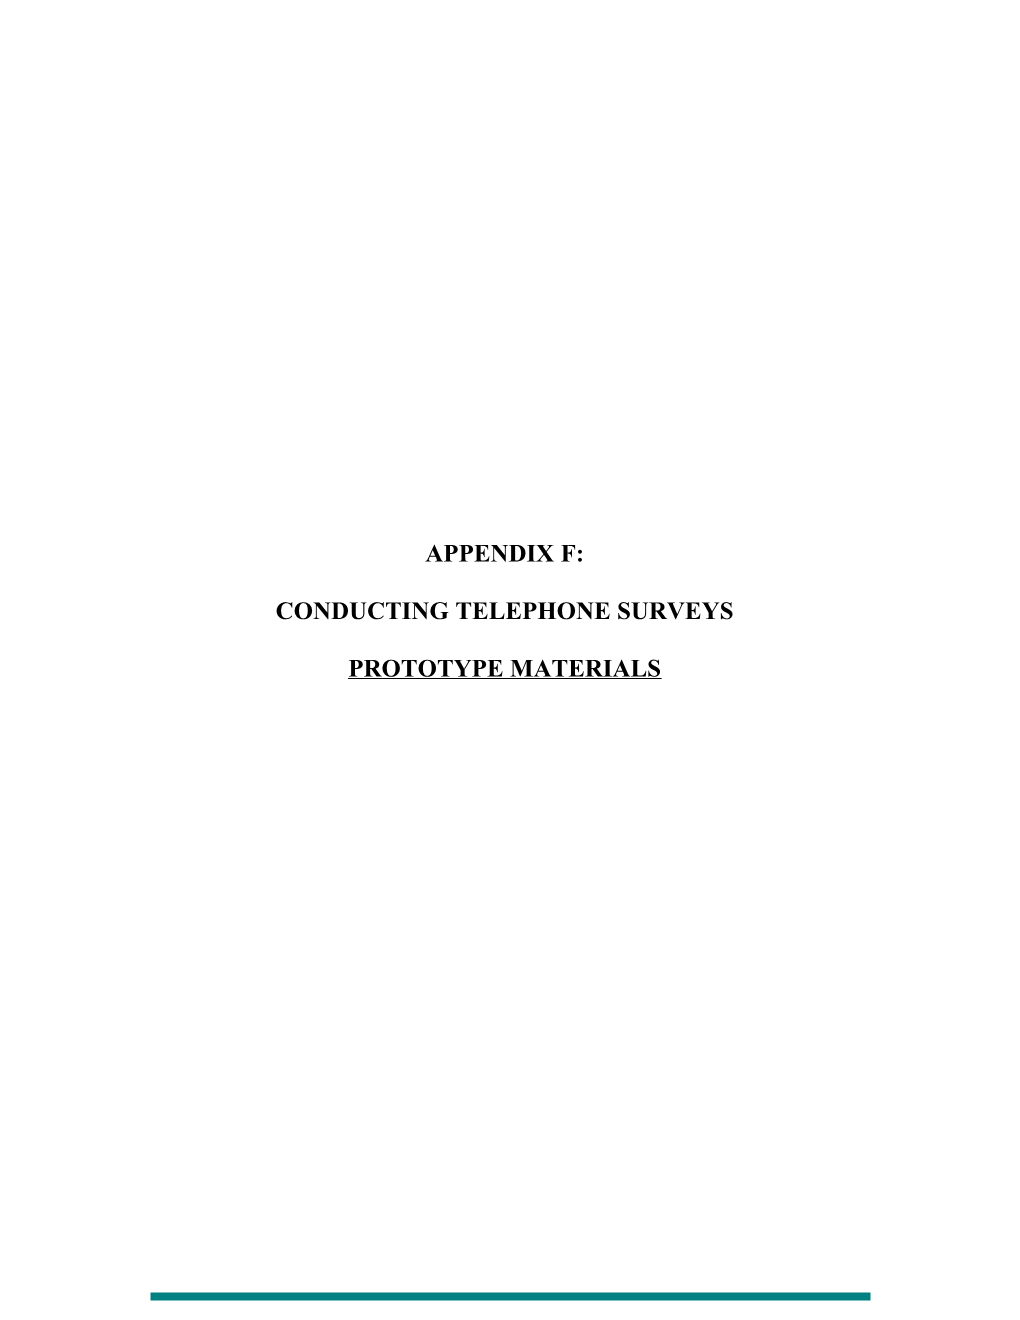 Workbook F - Telephone Survey Appendix Prototype Materials